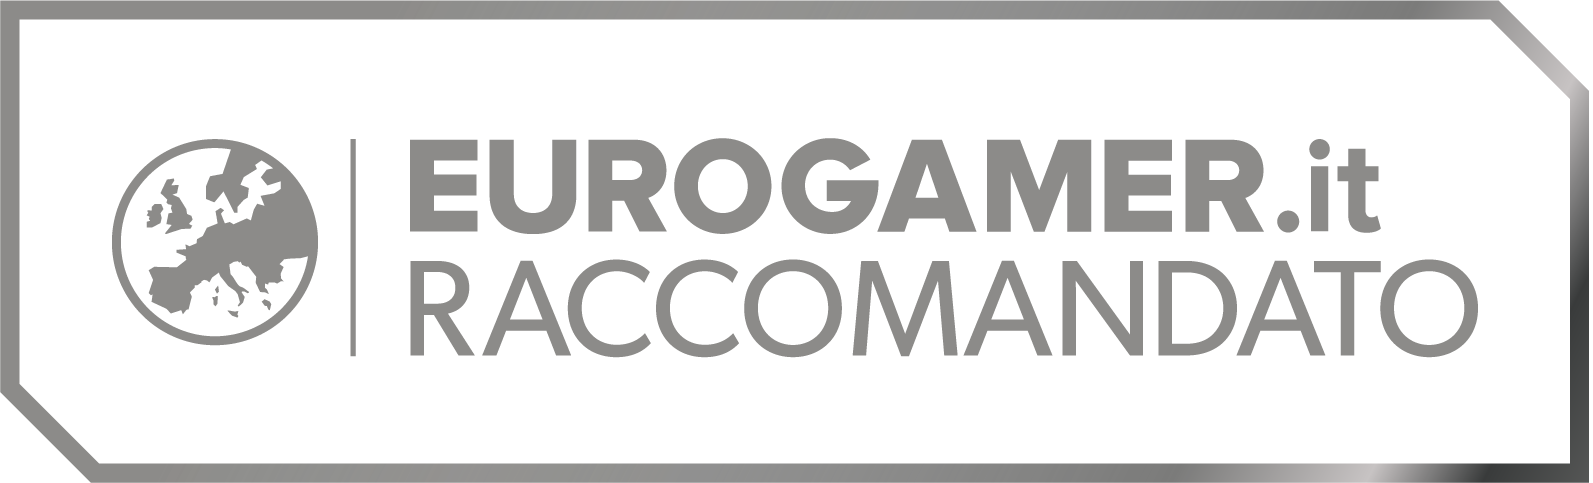 Eurogamer.it - Racomandato